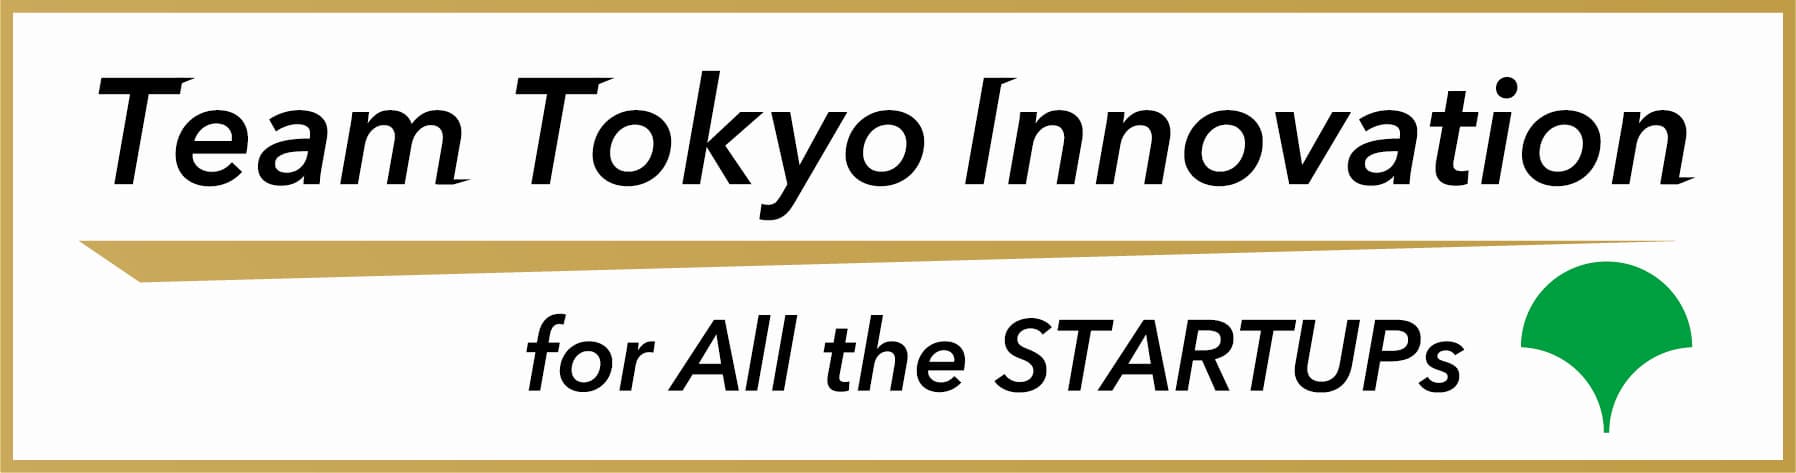 Team Tokyo Innovation for All the STARTUPs